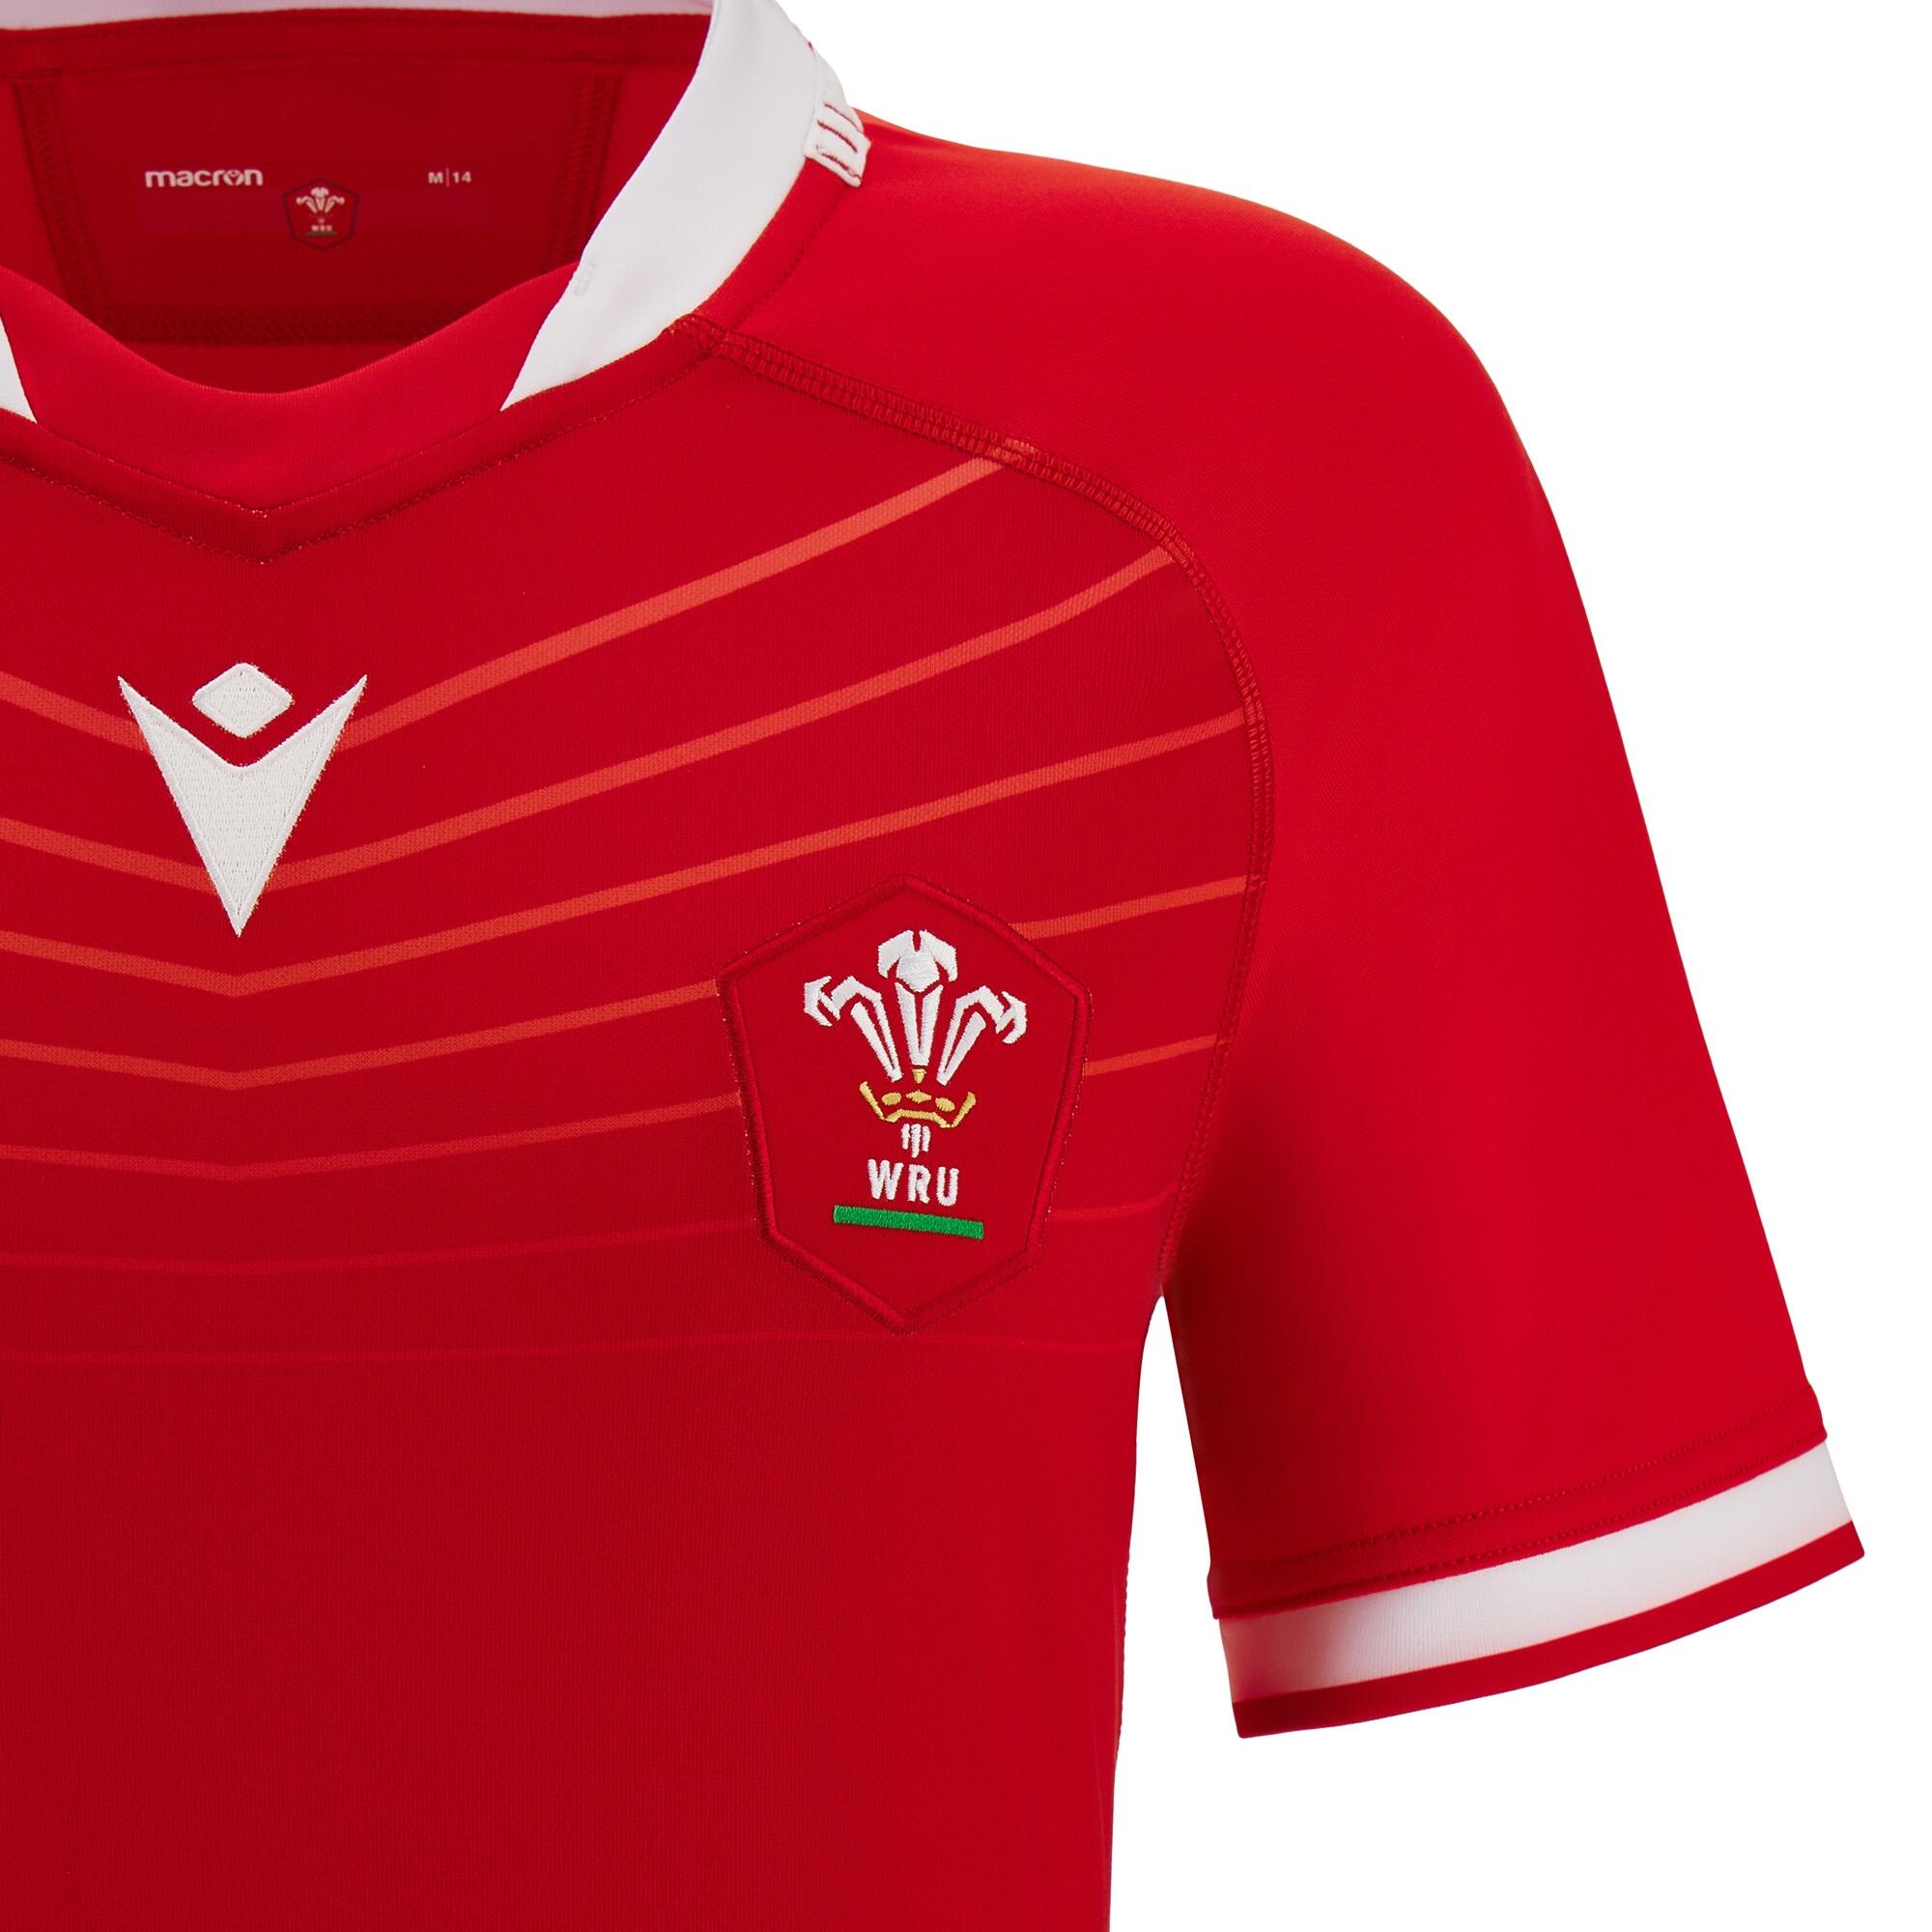 Macron Wales WRU 22/23 HOME  Womens Rugby World Cup Shirt 3/4